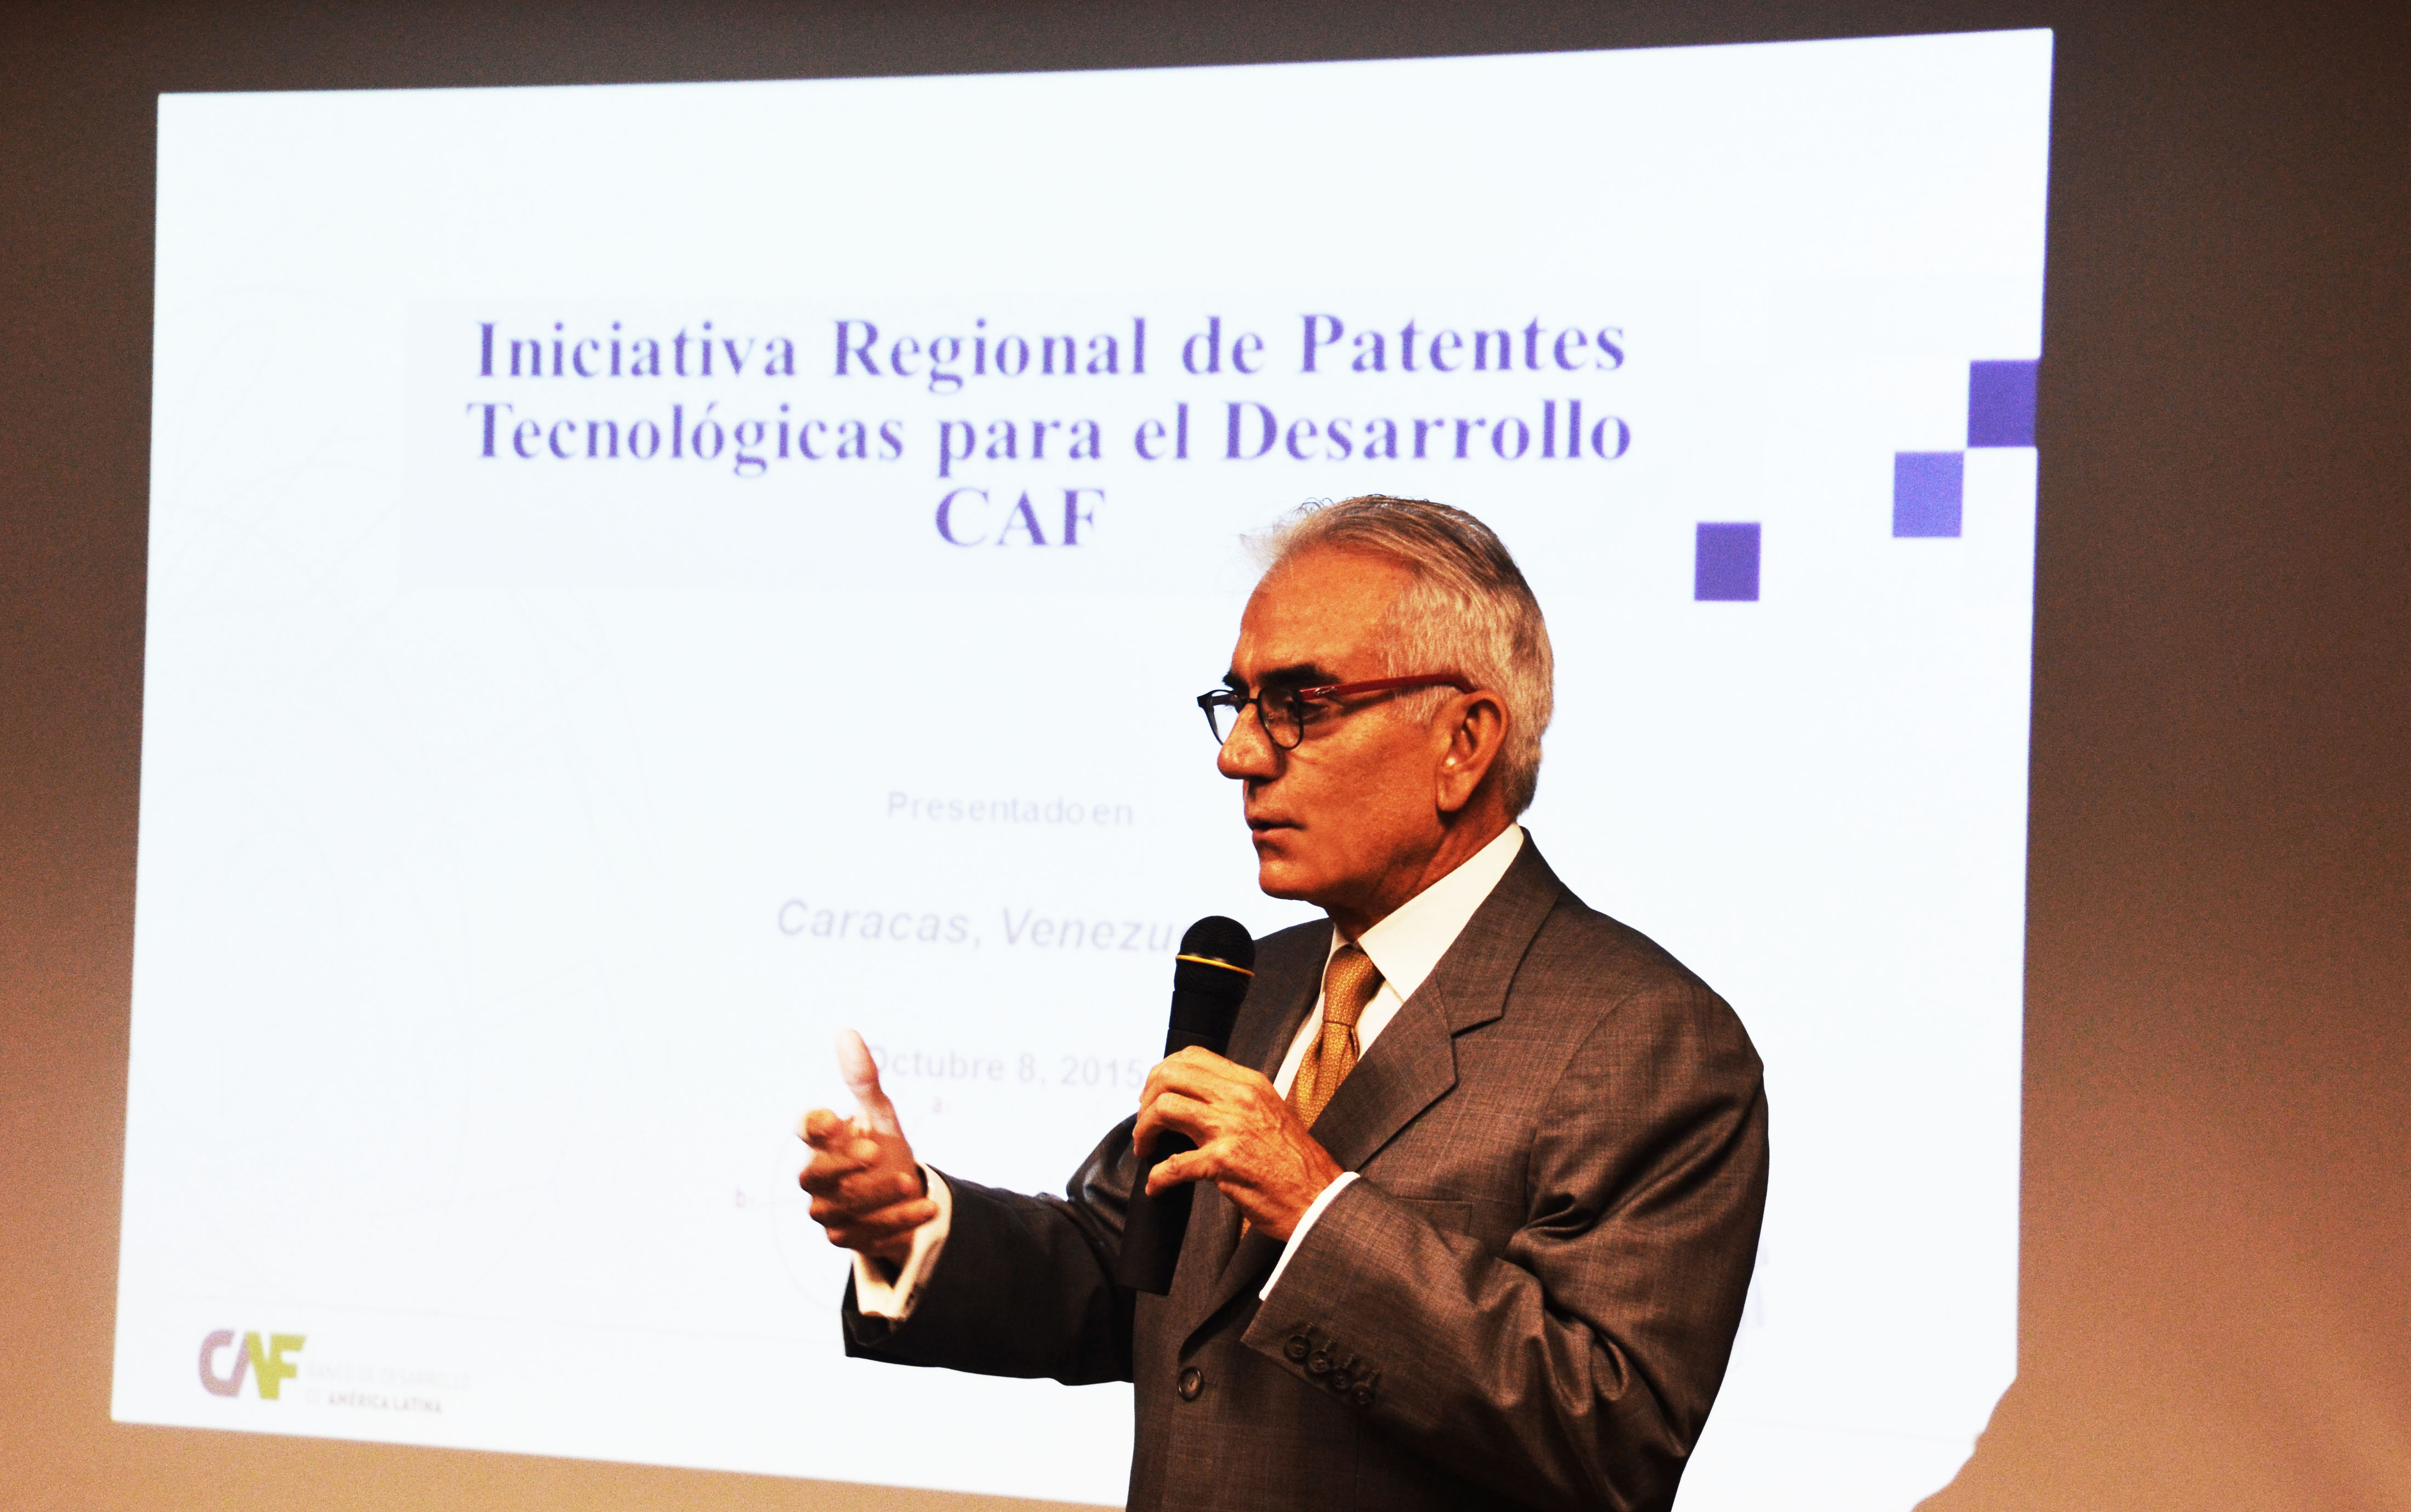 Presentation of the Patents Regional Initiative in Venezuela 